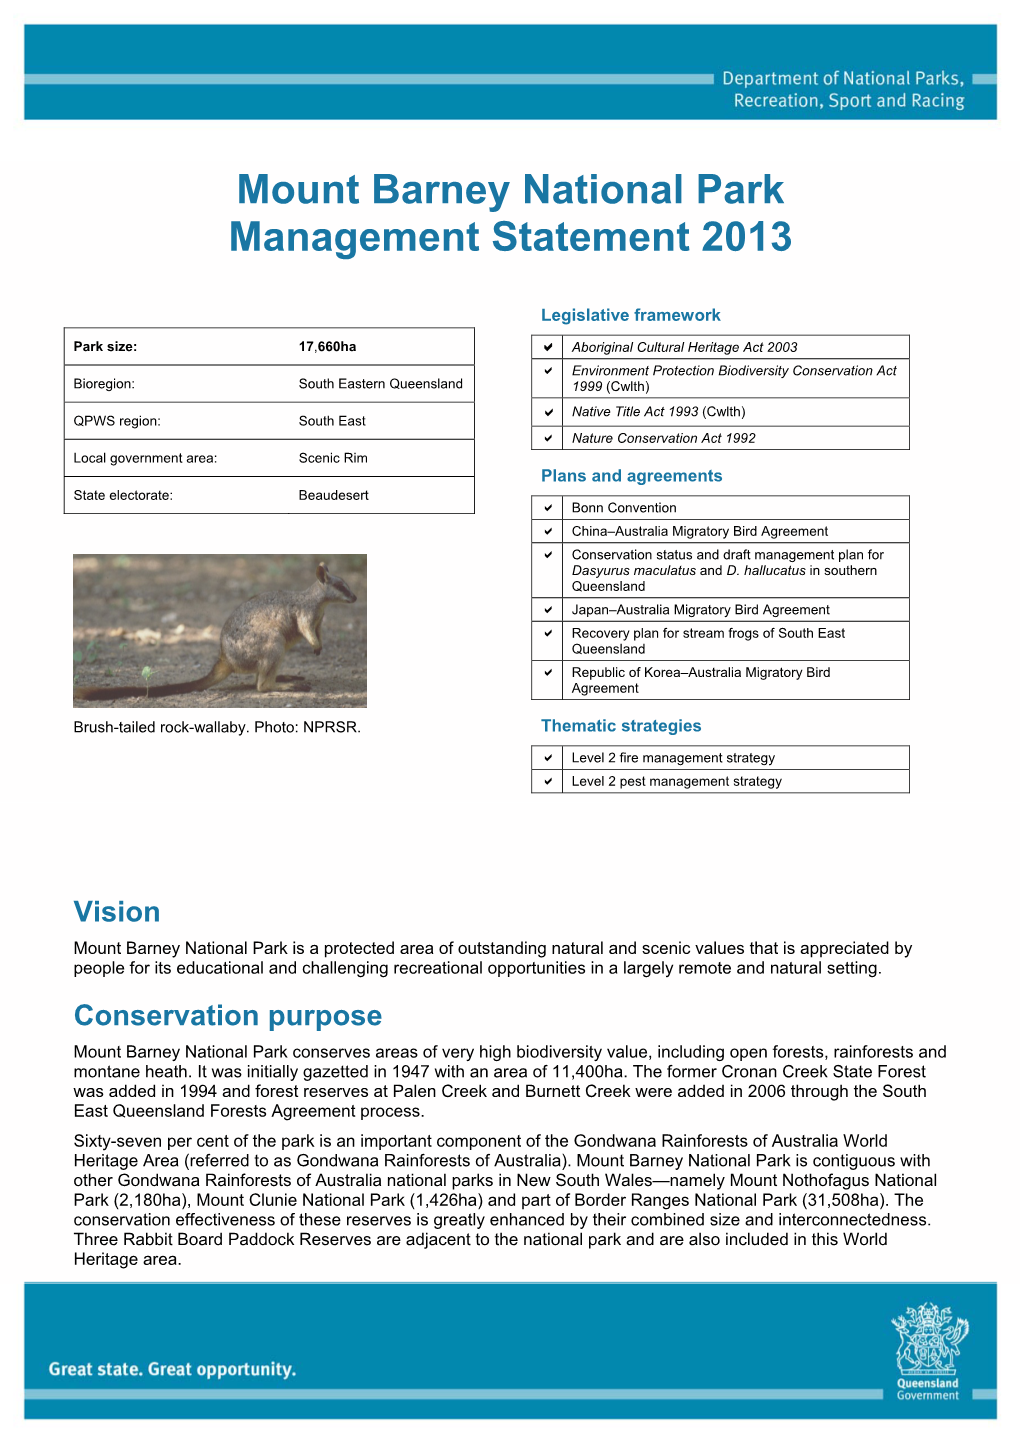 Mount Barney National Park Management Statement 2013